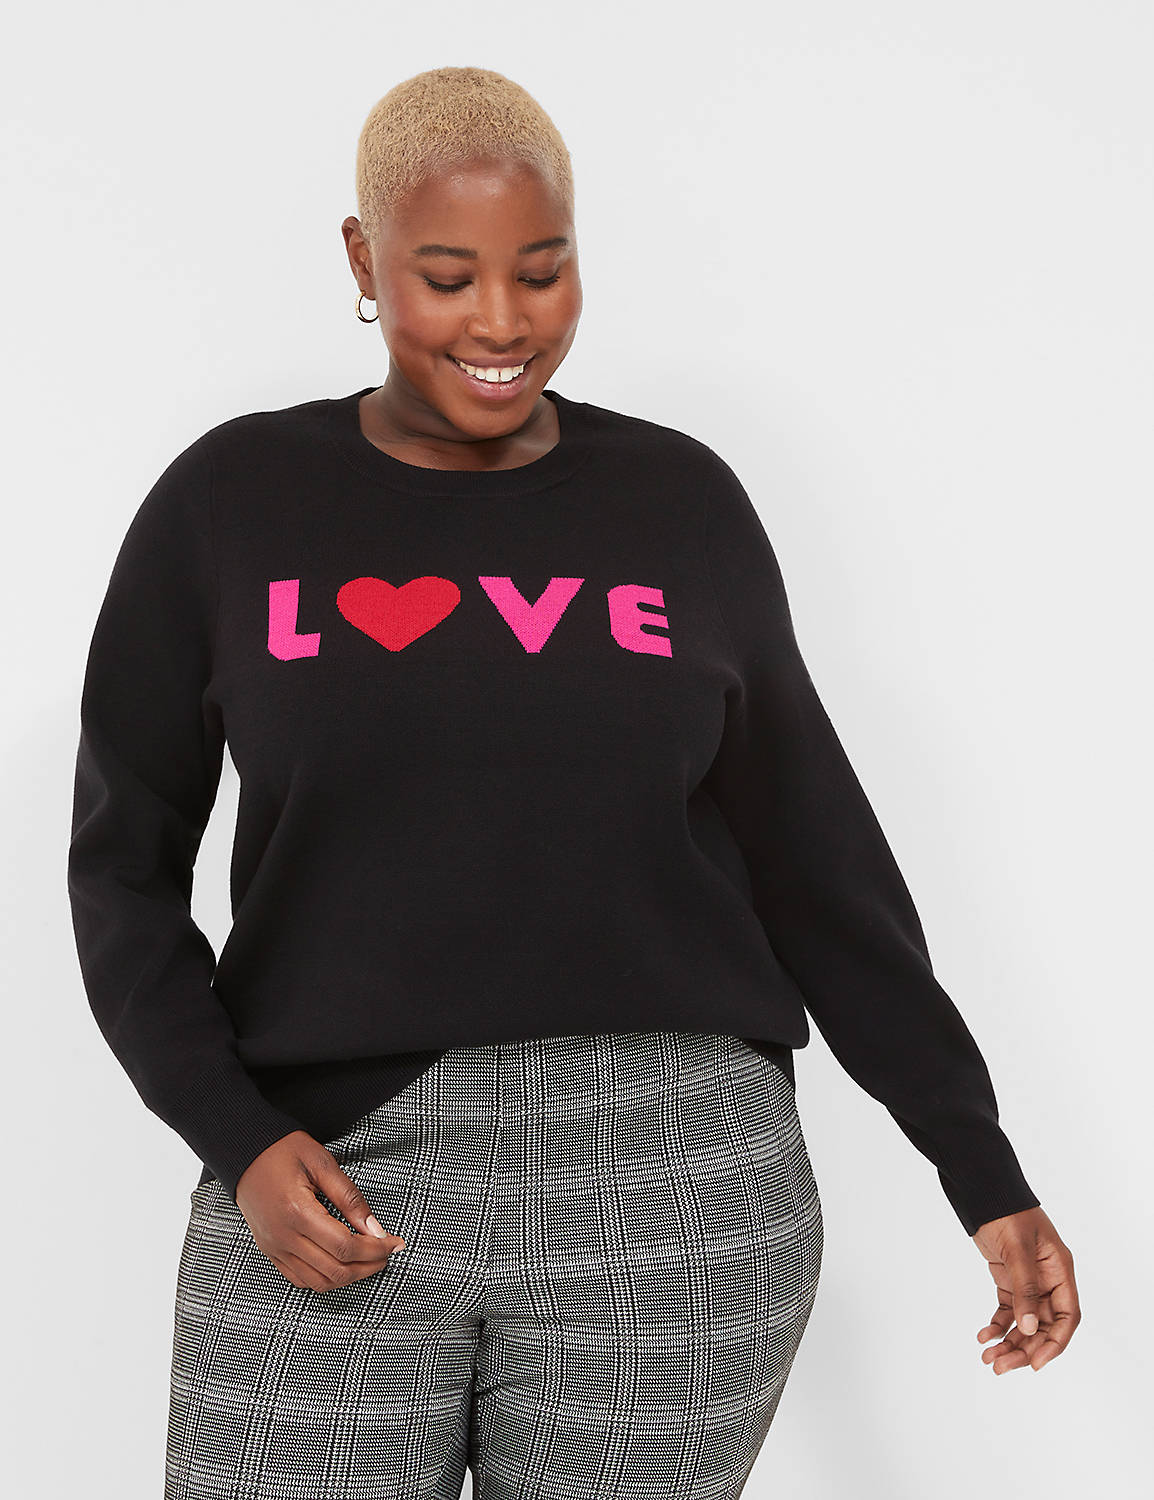 lane bryant crew-neck love graphic sweater 10/12 black